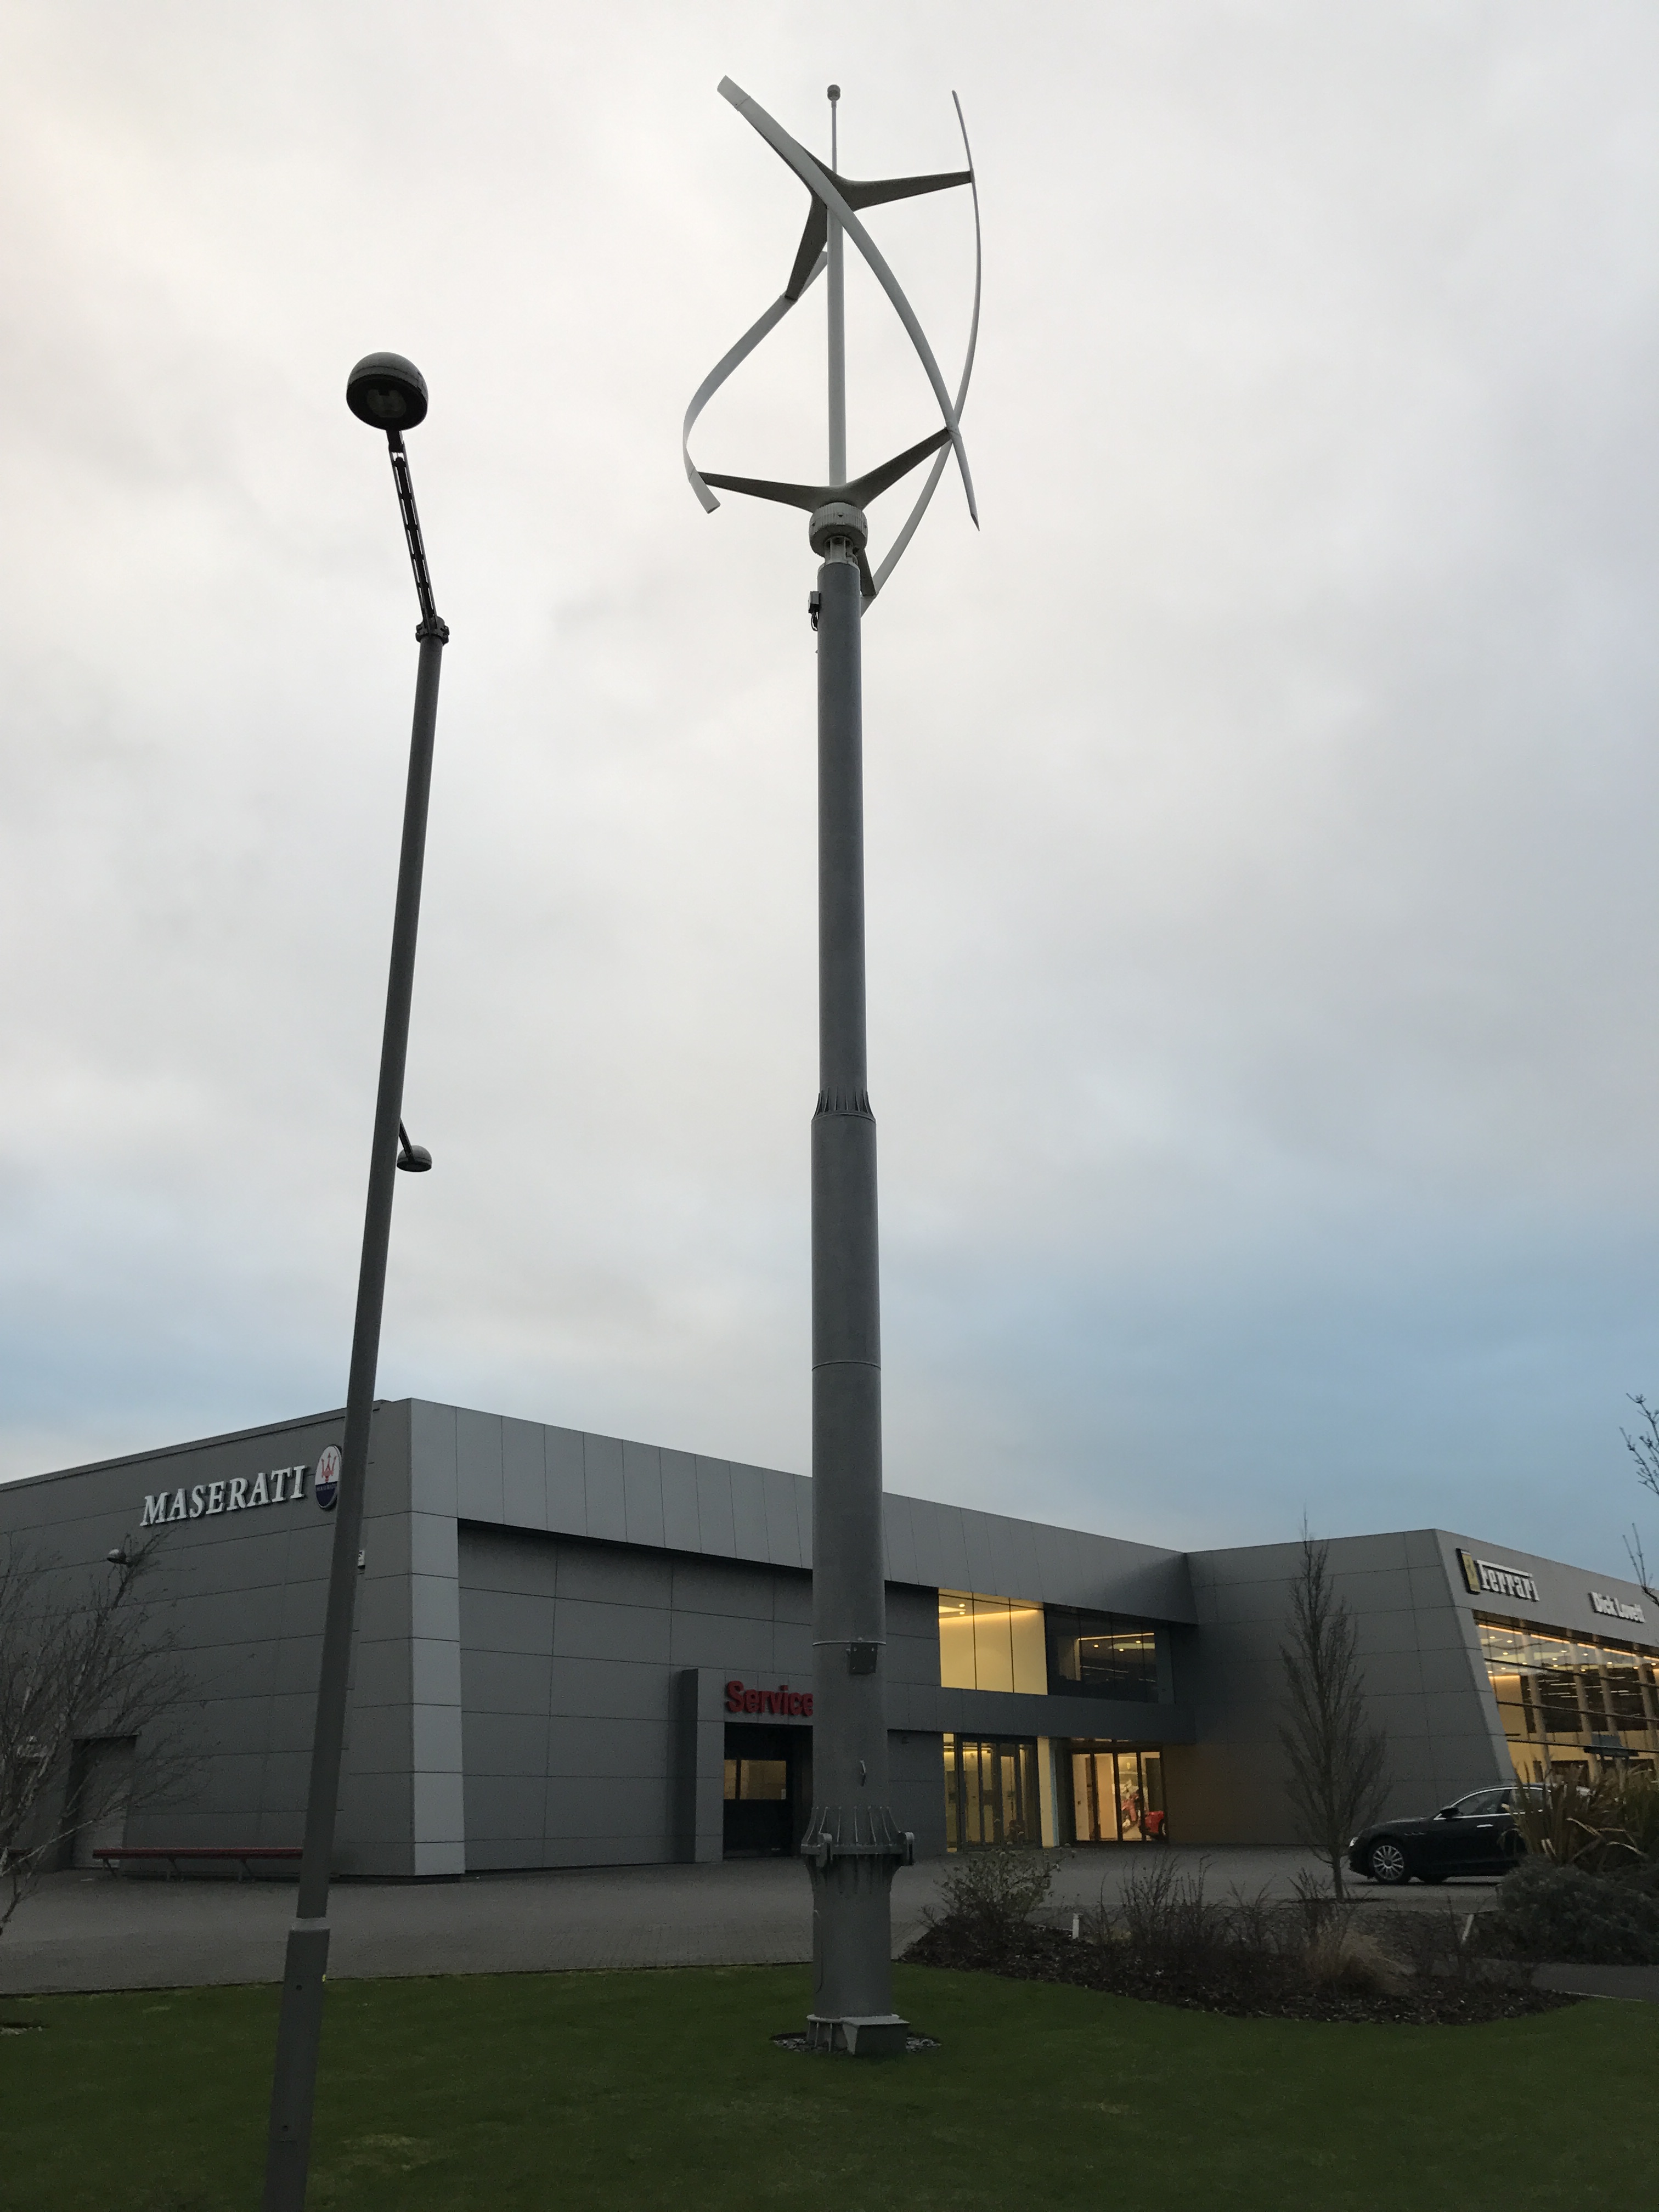 Qr6 vertical axis wind turbine